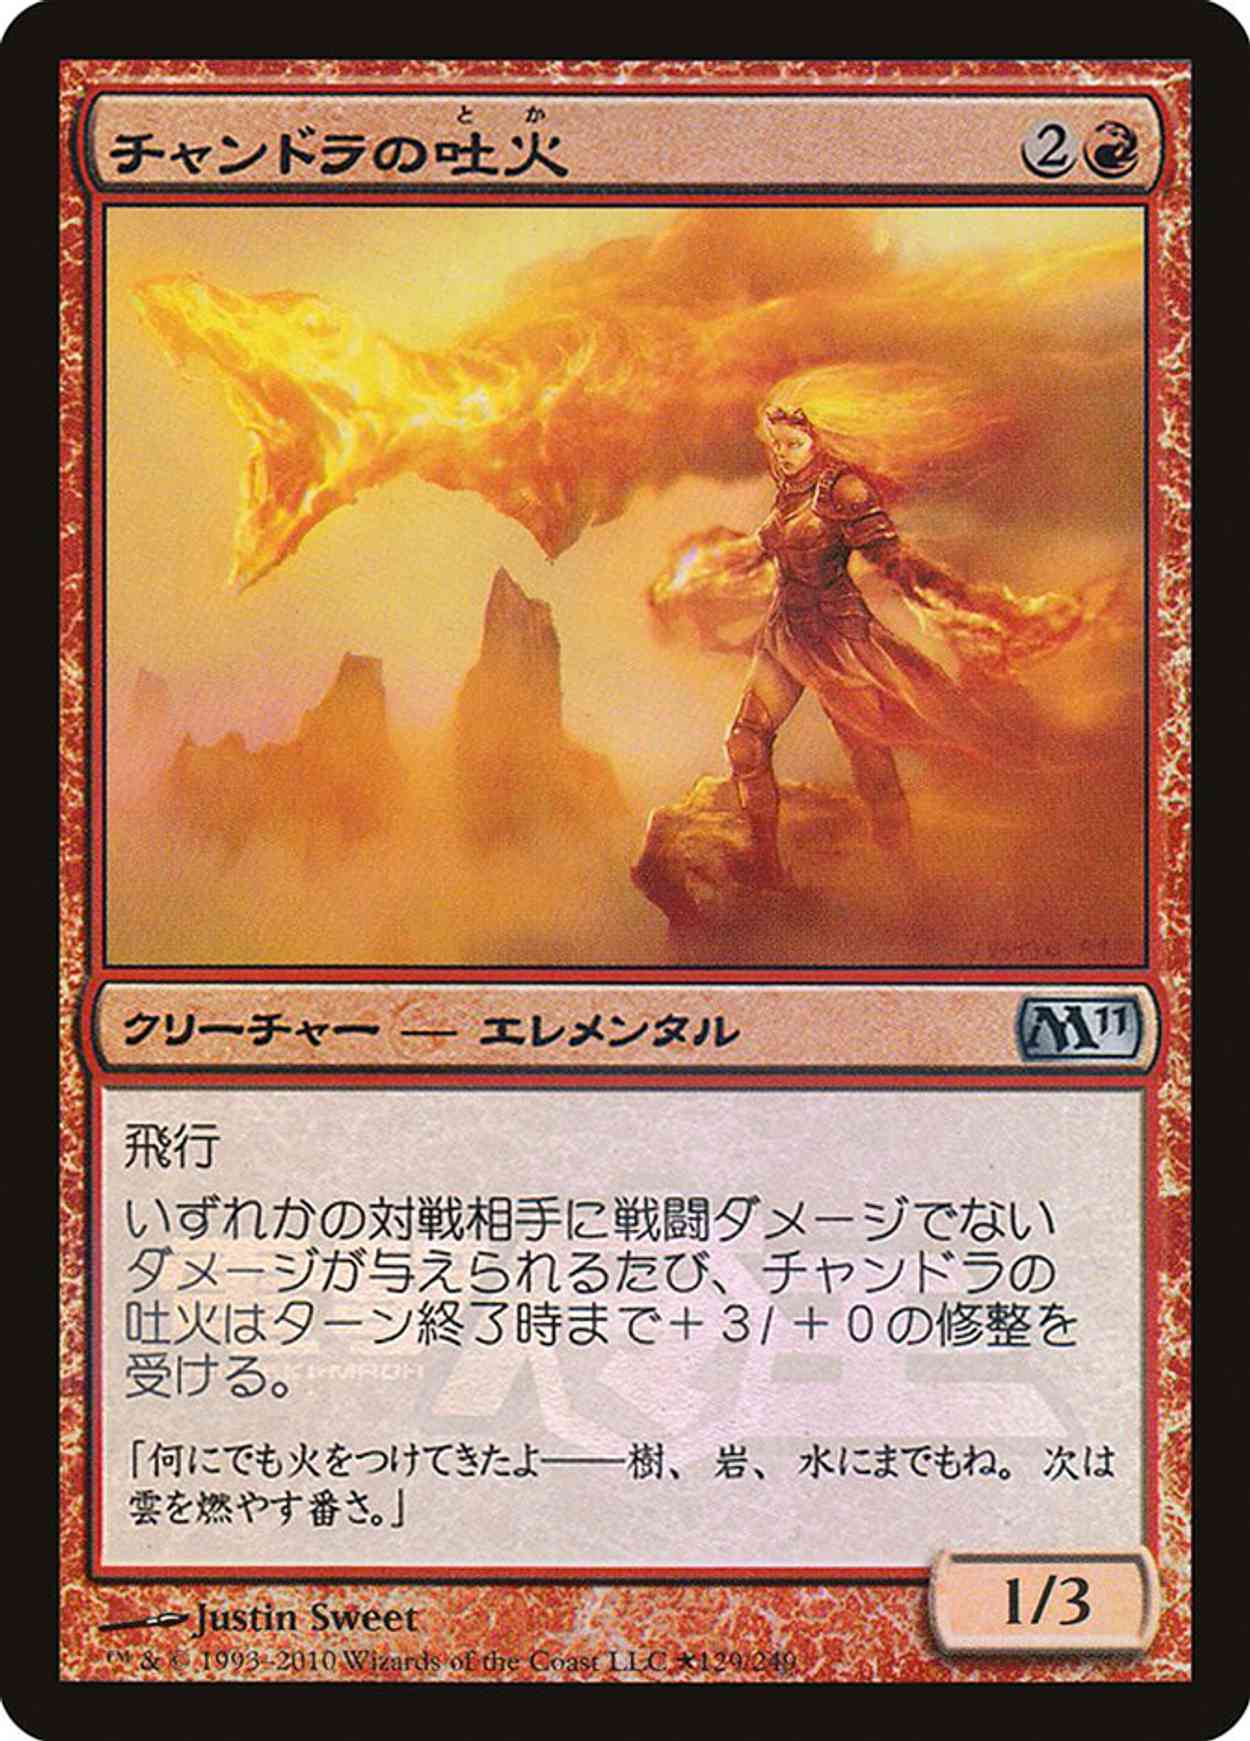 Chandra's Spitfire (Dengeki Maoh Promo) magic card front